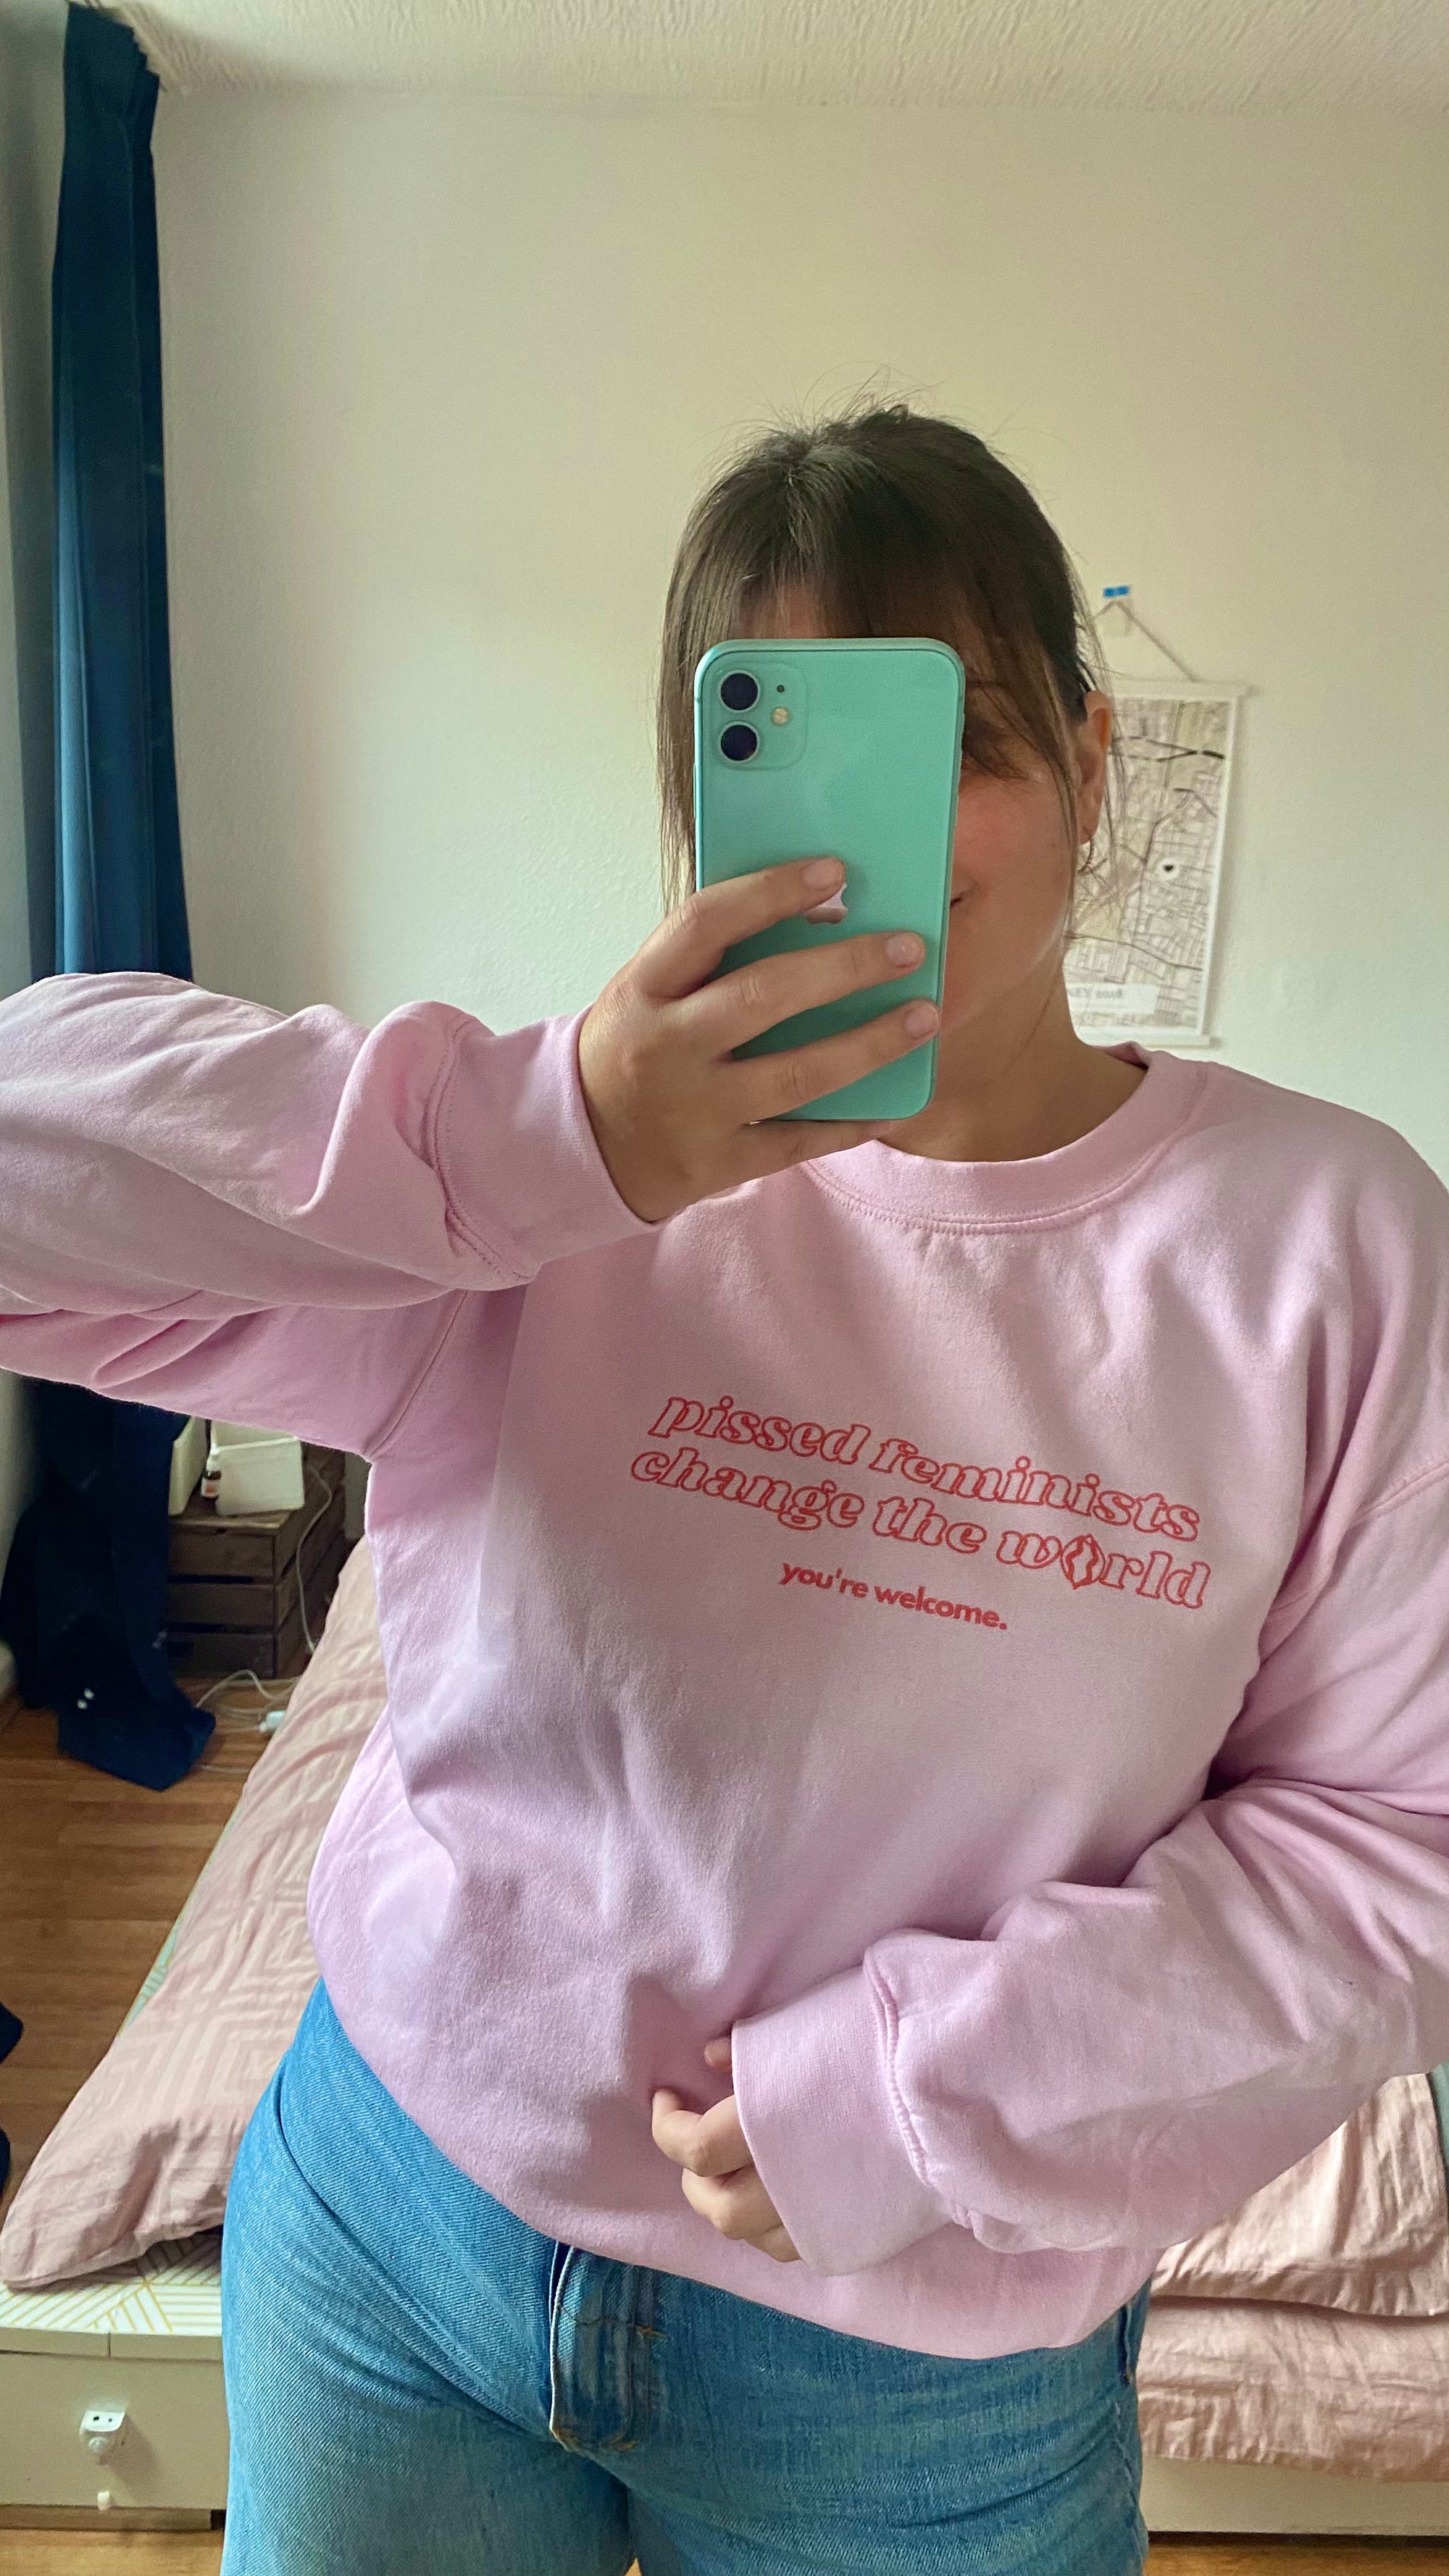 Pissed Feminists Change The World Sweatshirt